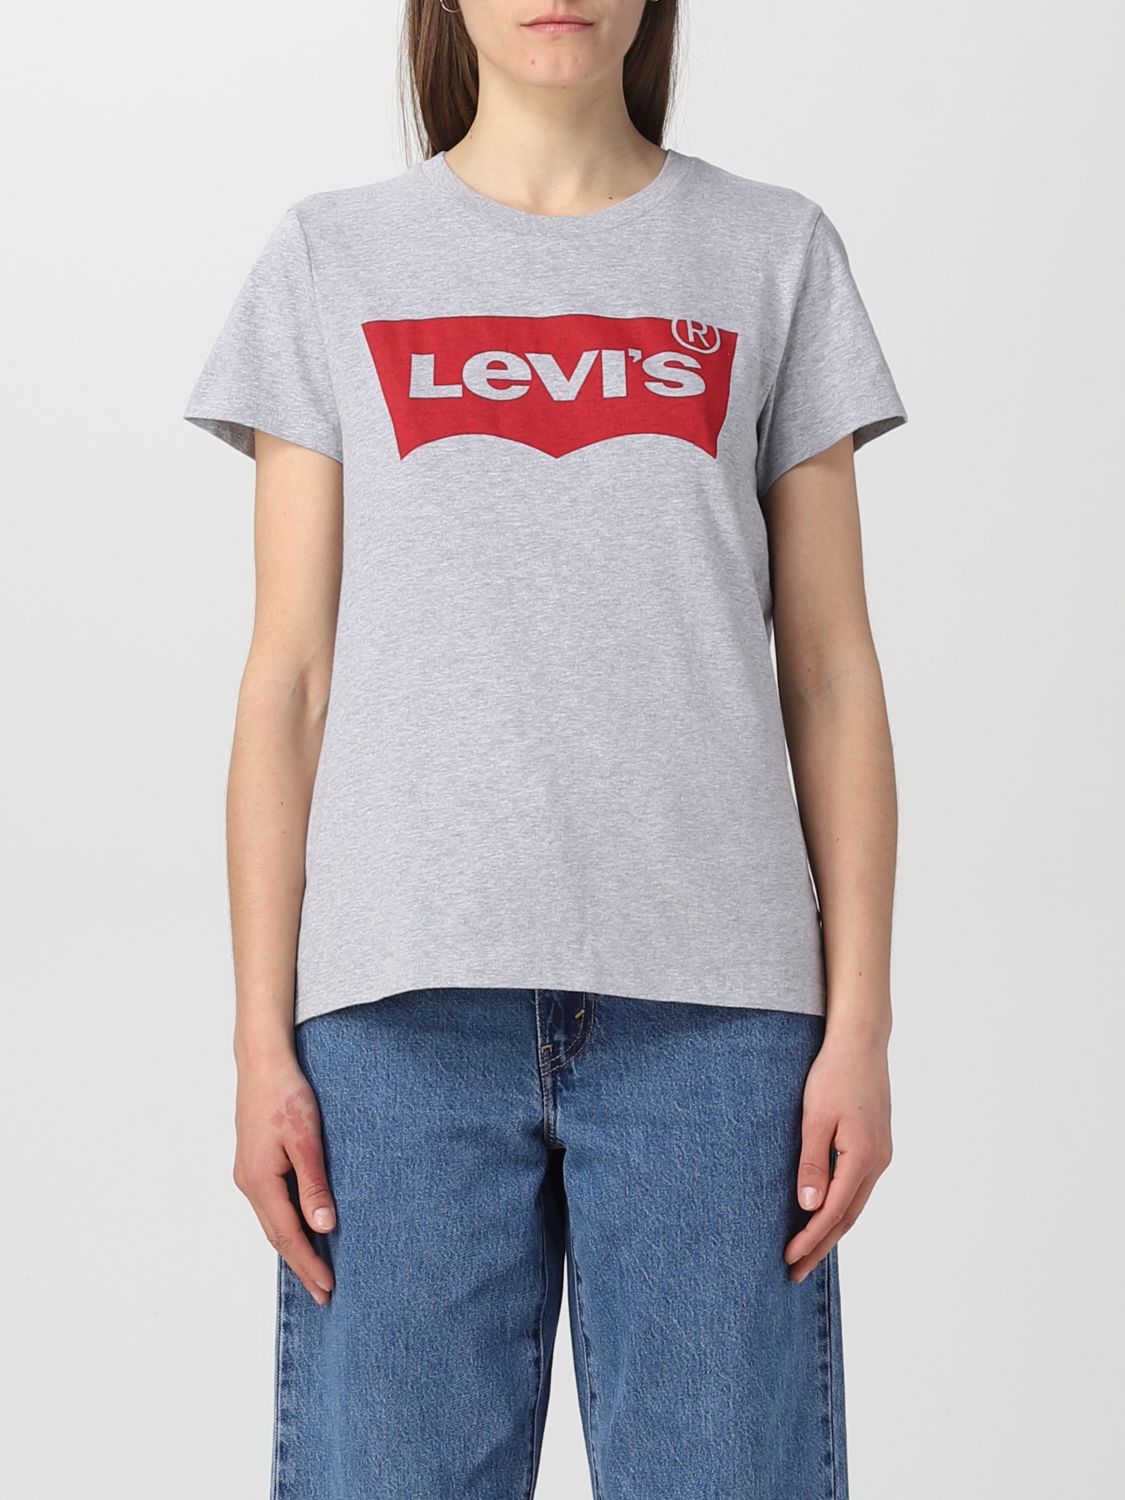 LEVI'S: Camiseta mujer, | Camiseta Levi's 173691686 en línea en GIGLIO.COM